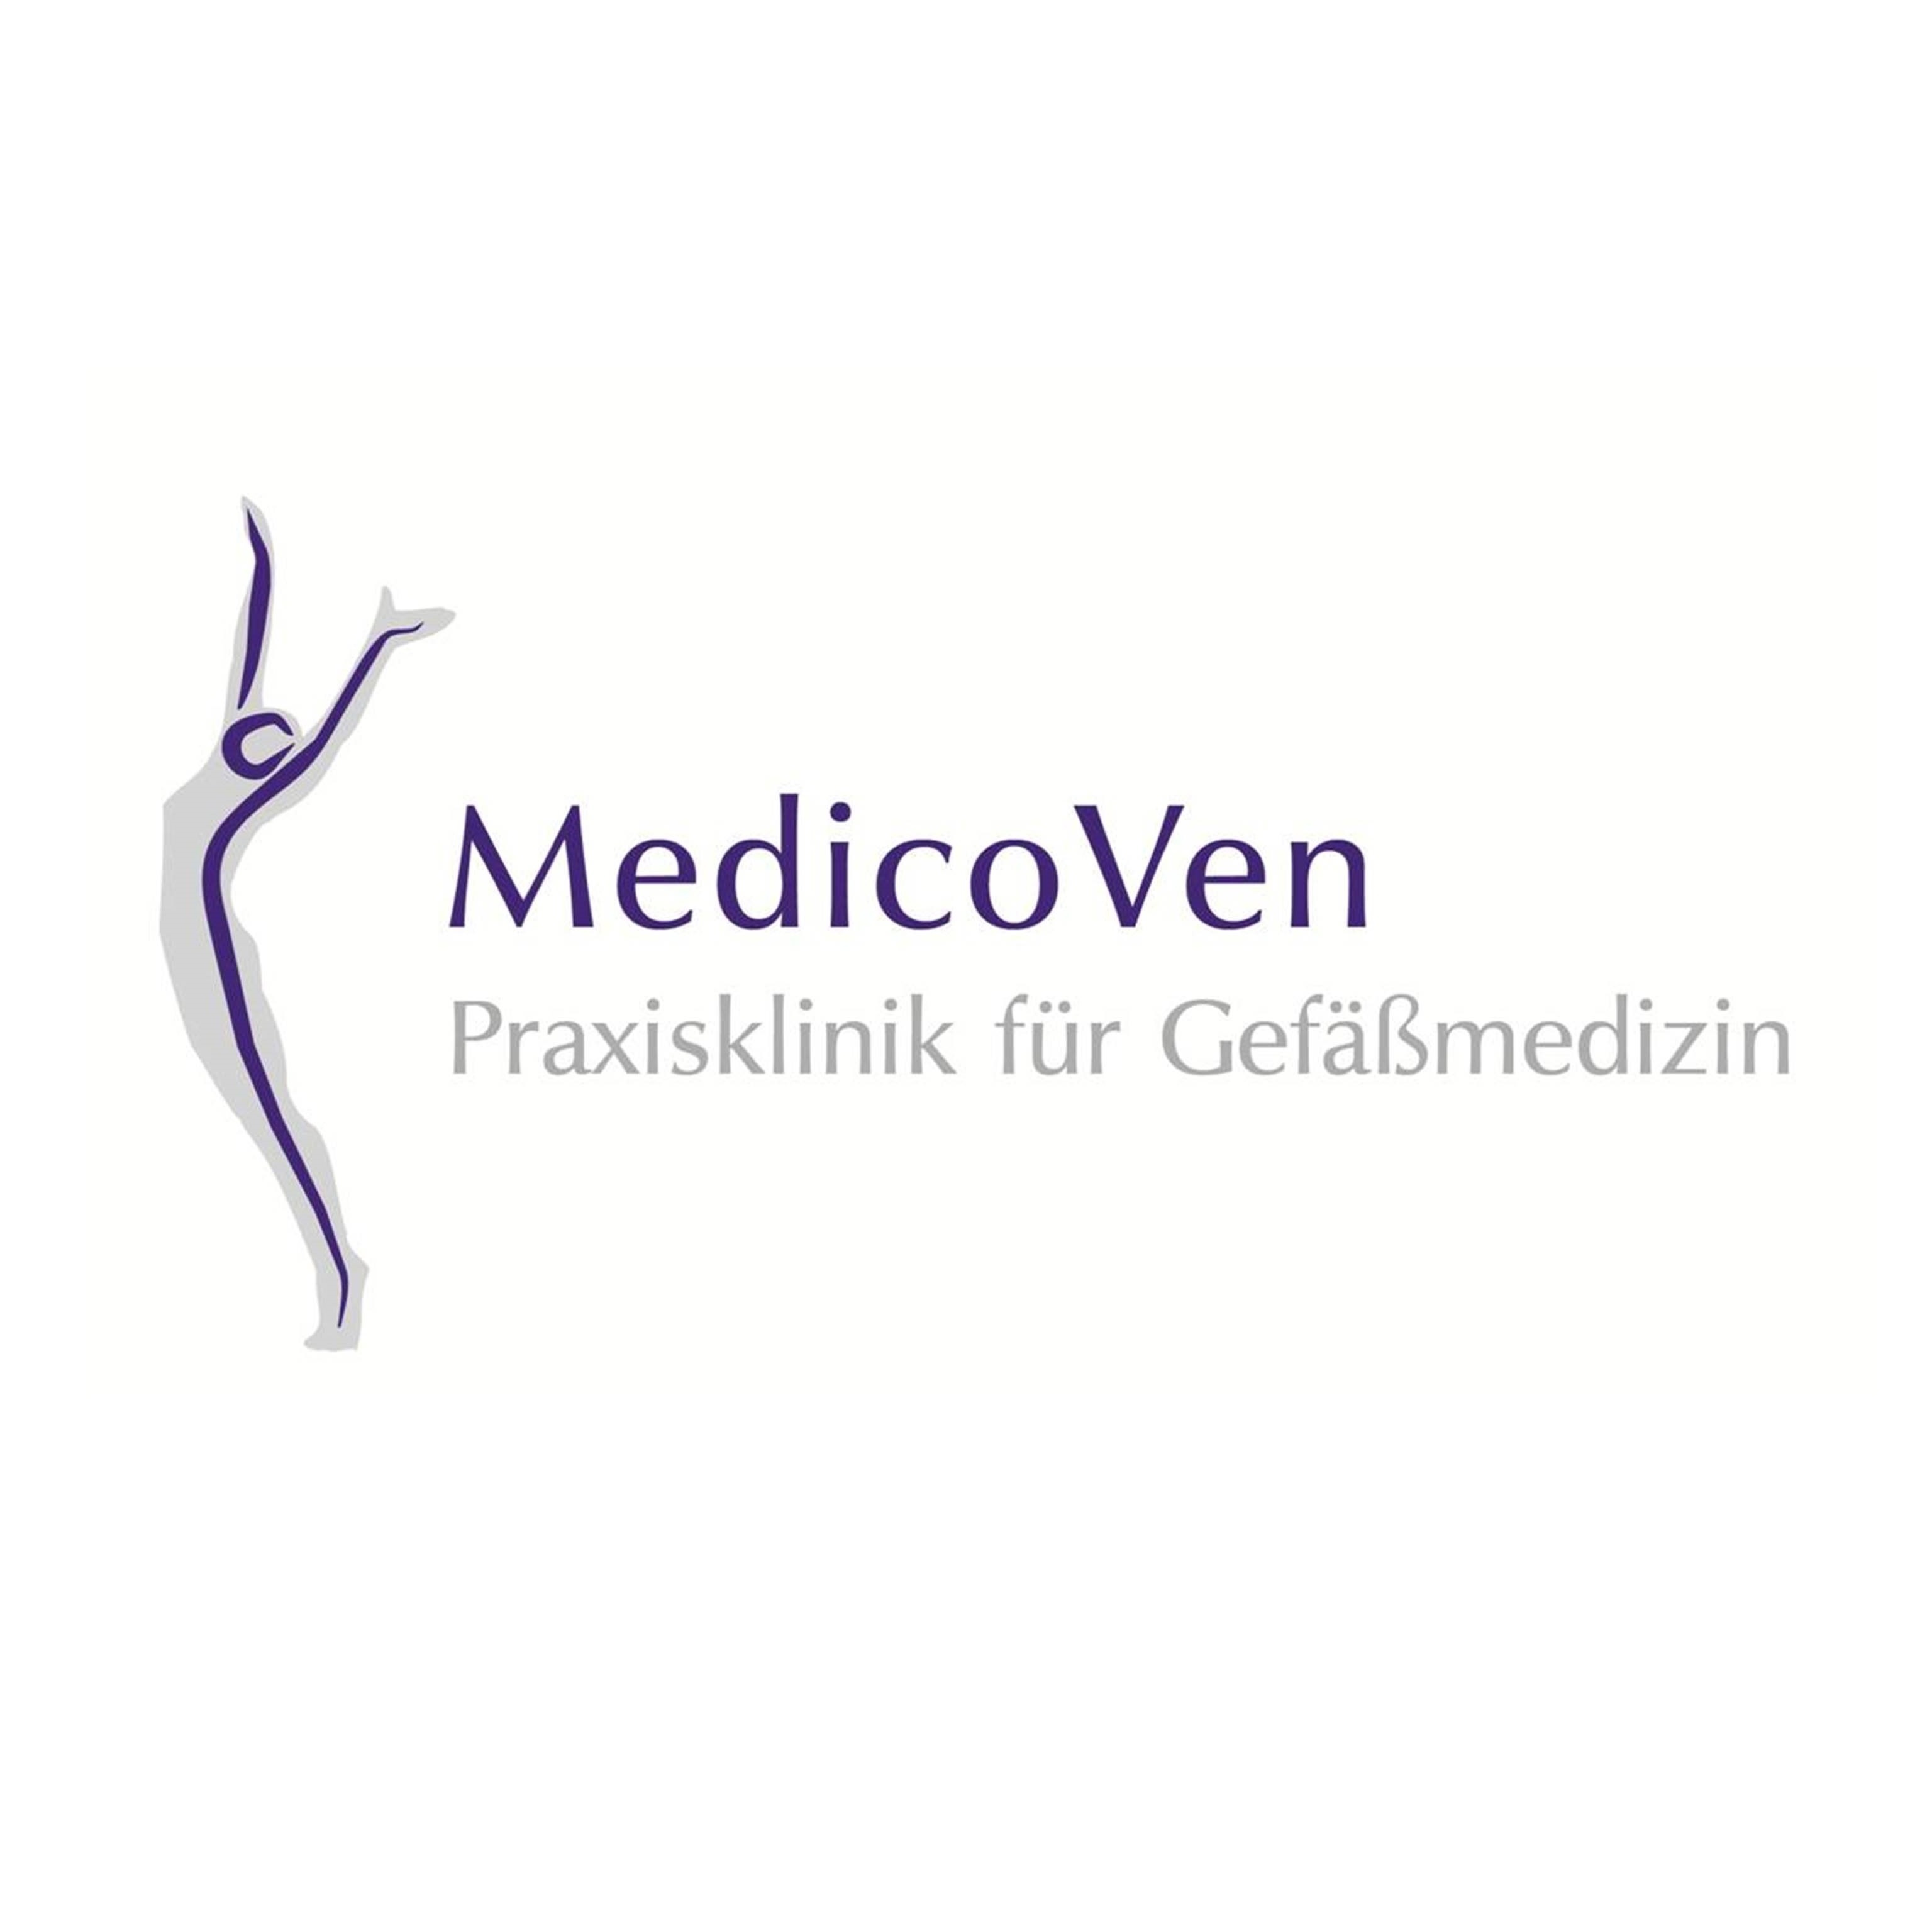 MedicoVen - Praxisklinik für Gefäßmedizin in Chemnitz - Logo